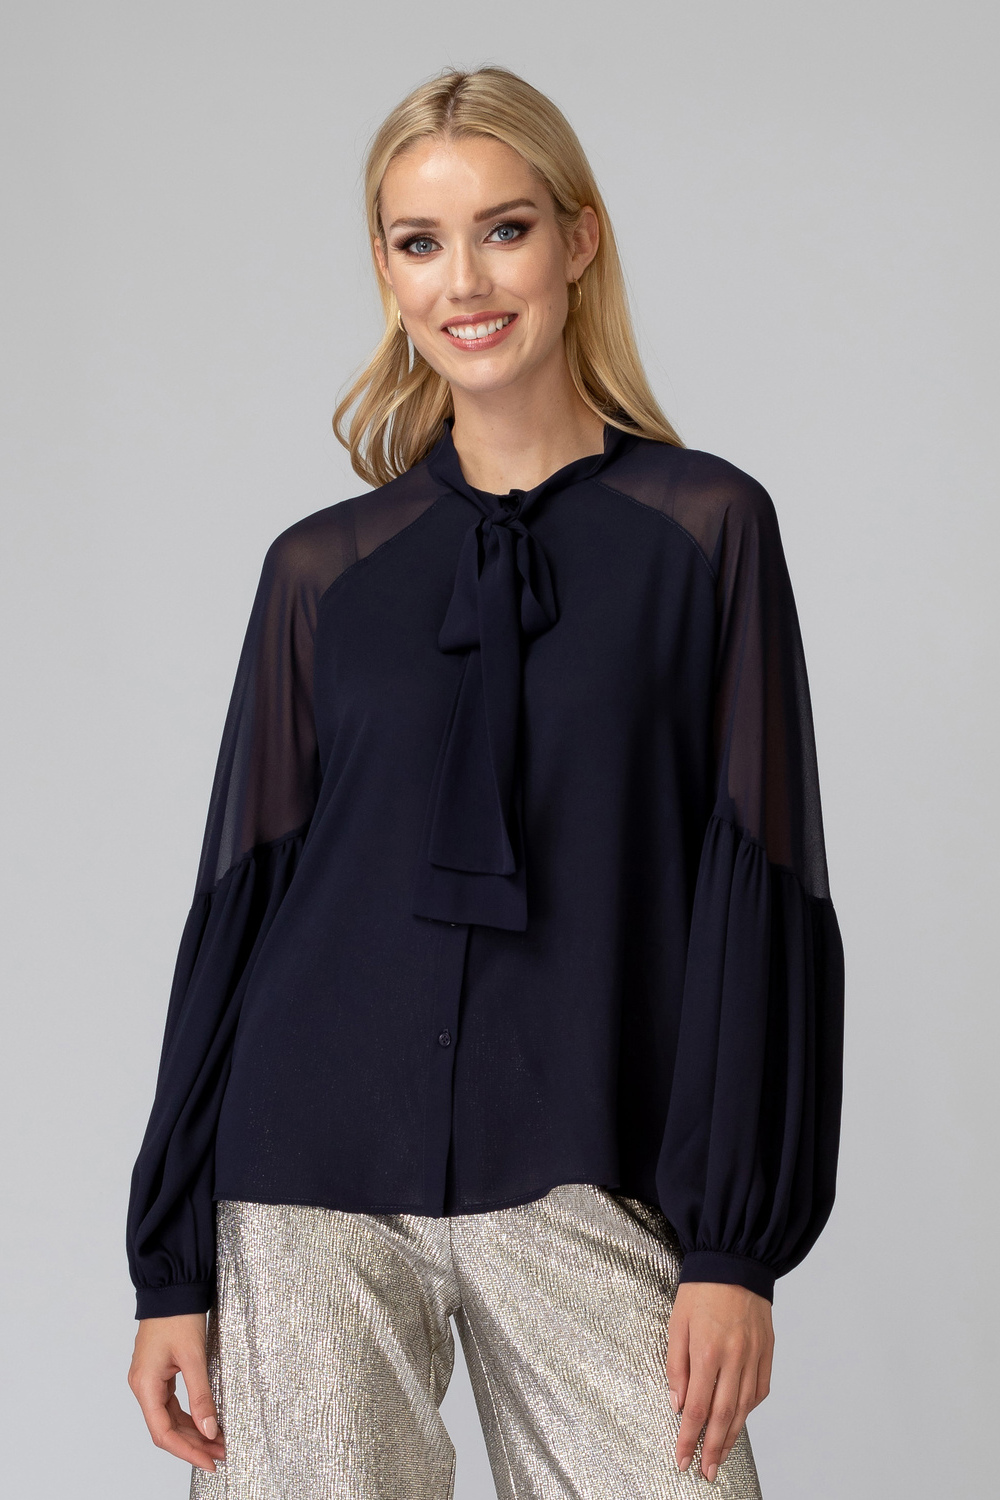 Joseph Ribkoff blouse style 194235. Midnight Blue 40